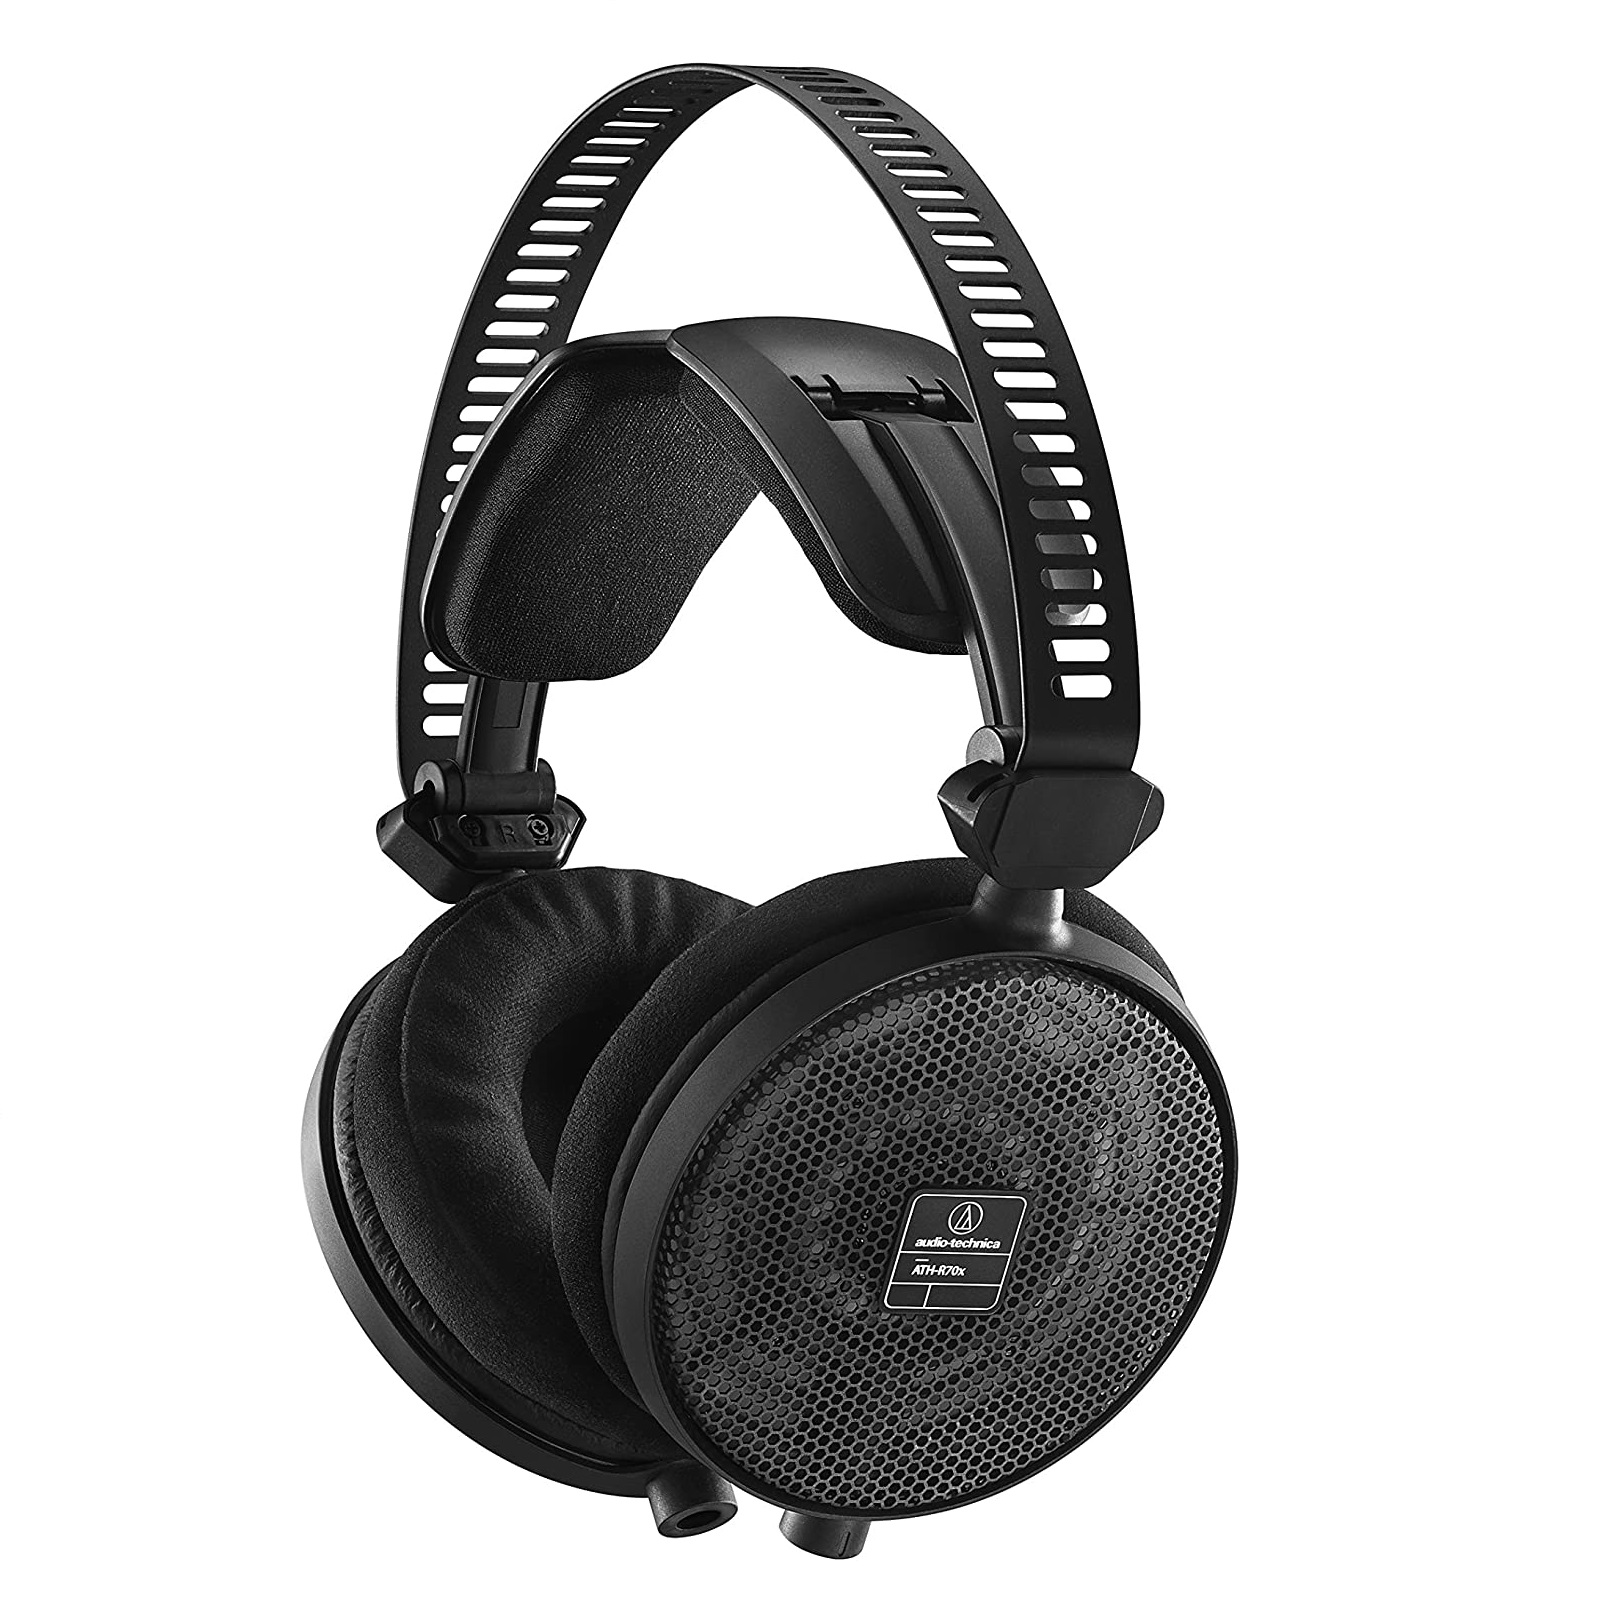 Мониторные наушники Audio-Technica ATH-R70x, черный ln007467 4 4mm xlr 2 5mm 6 5mm 8 core black silver plated braided earphone headphone cable for audio technica ath r70x